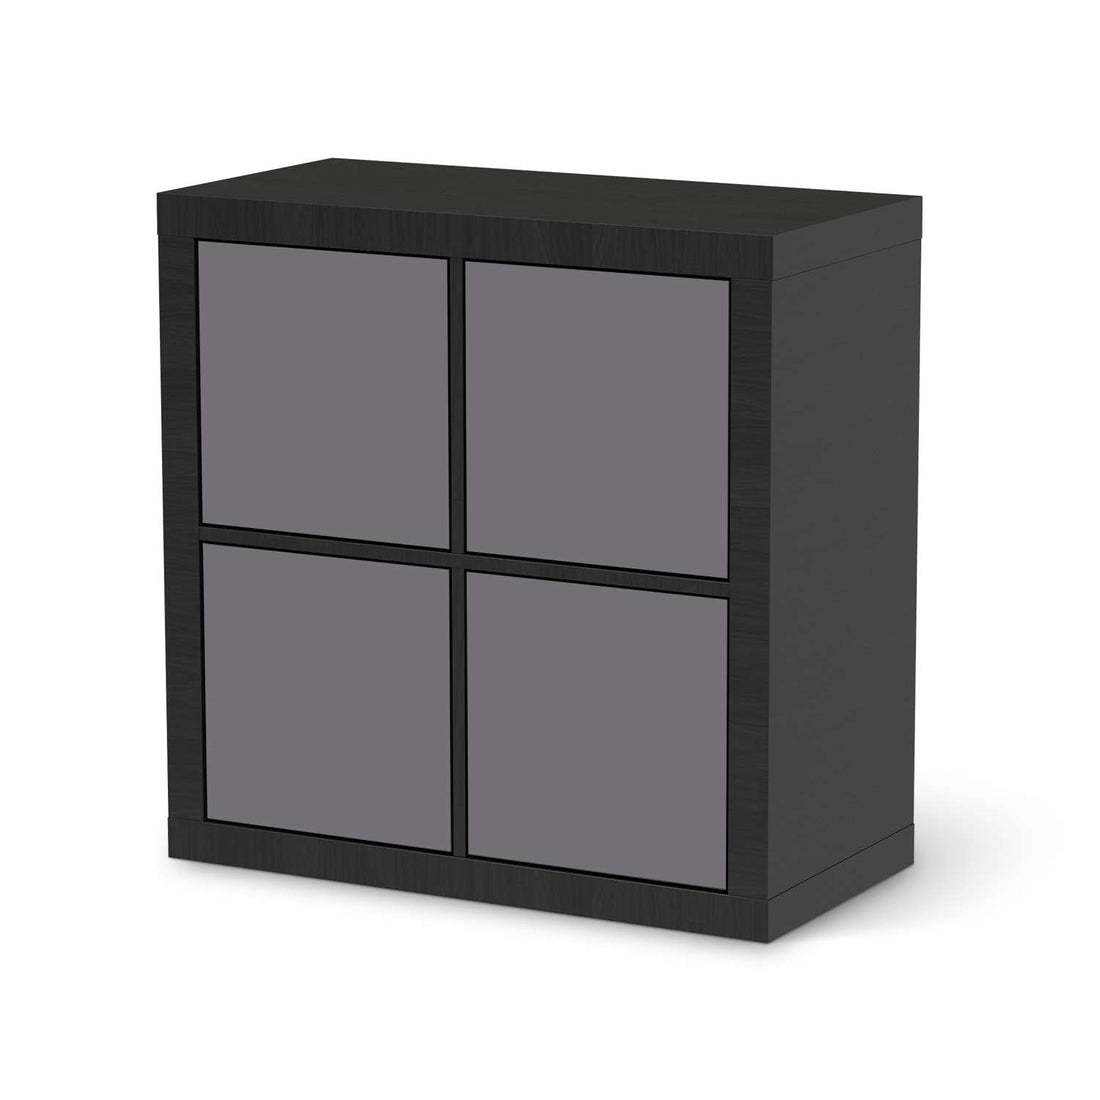 Klebefolie für Möbel Grau Light - IKEA Kallax Regal 4 Türen - schwarz